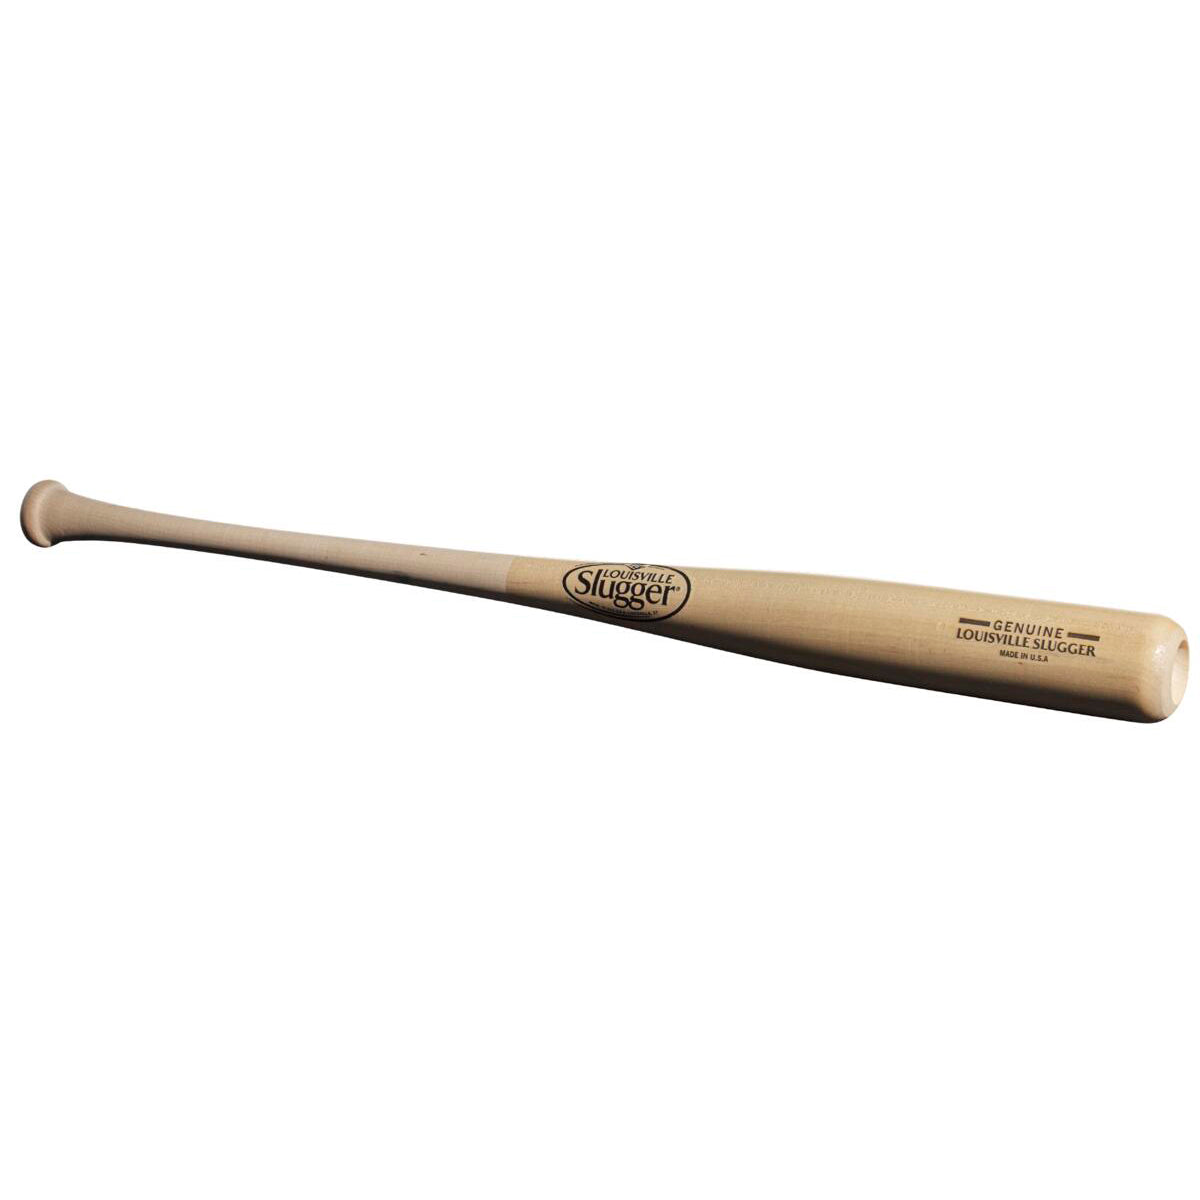 Louisville Slugger Genuine Mix Black Baseball Bat